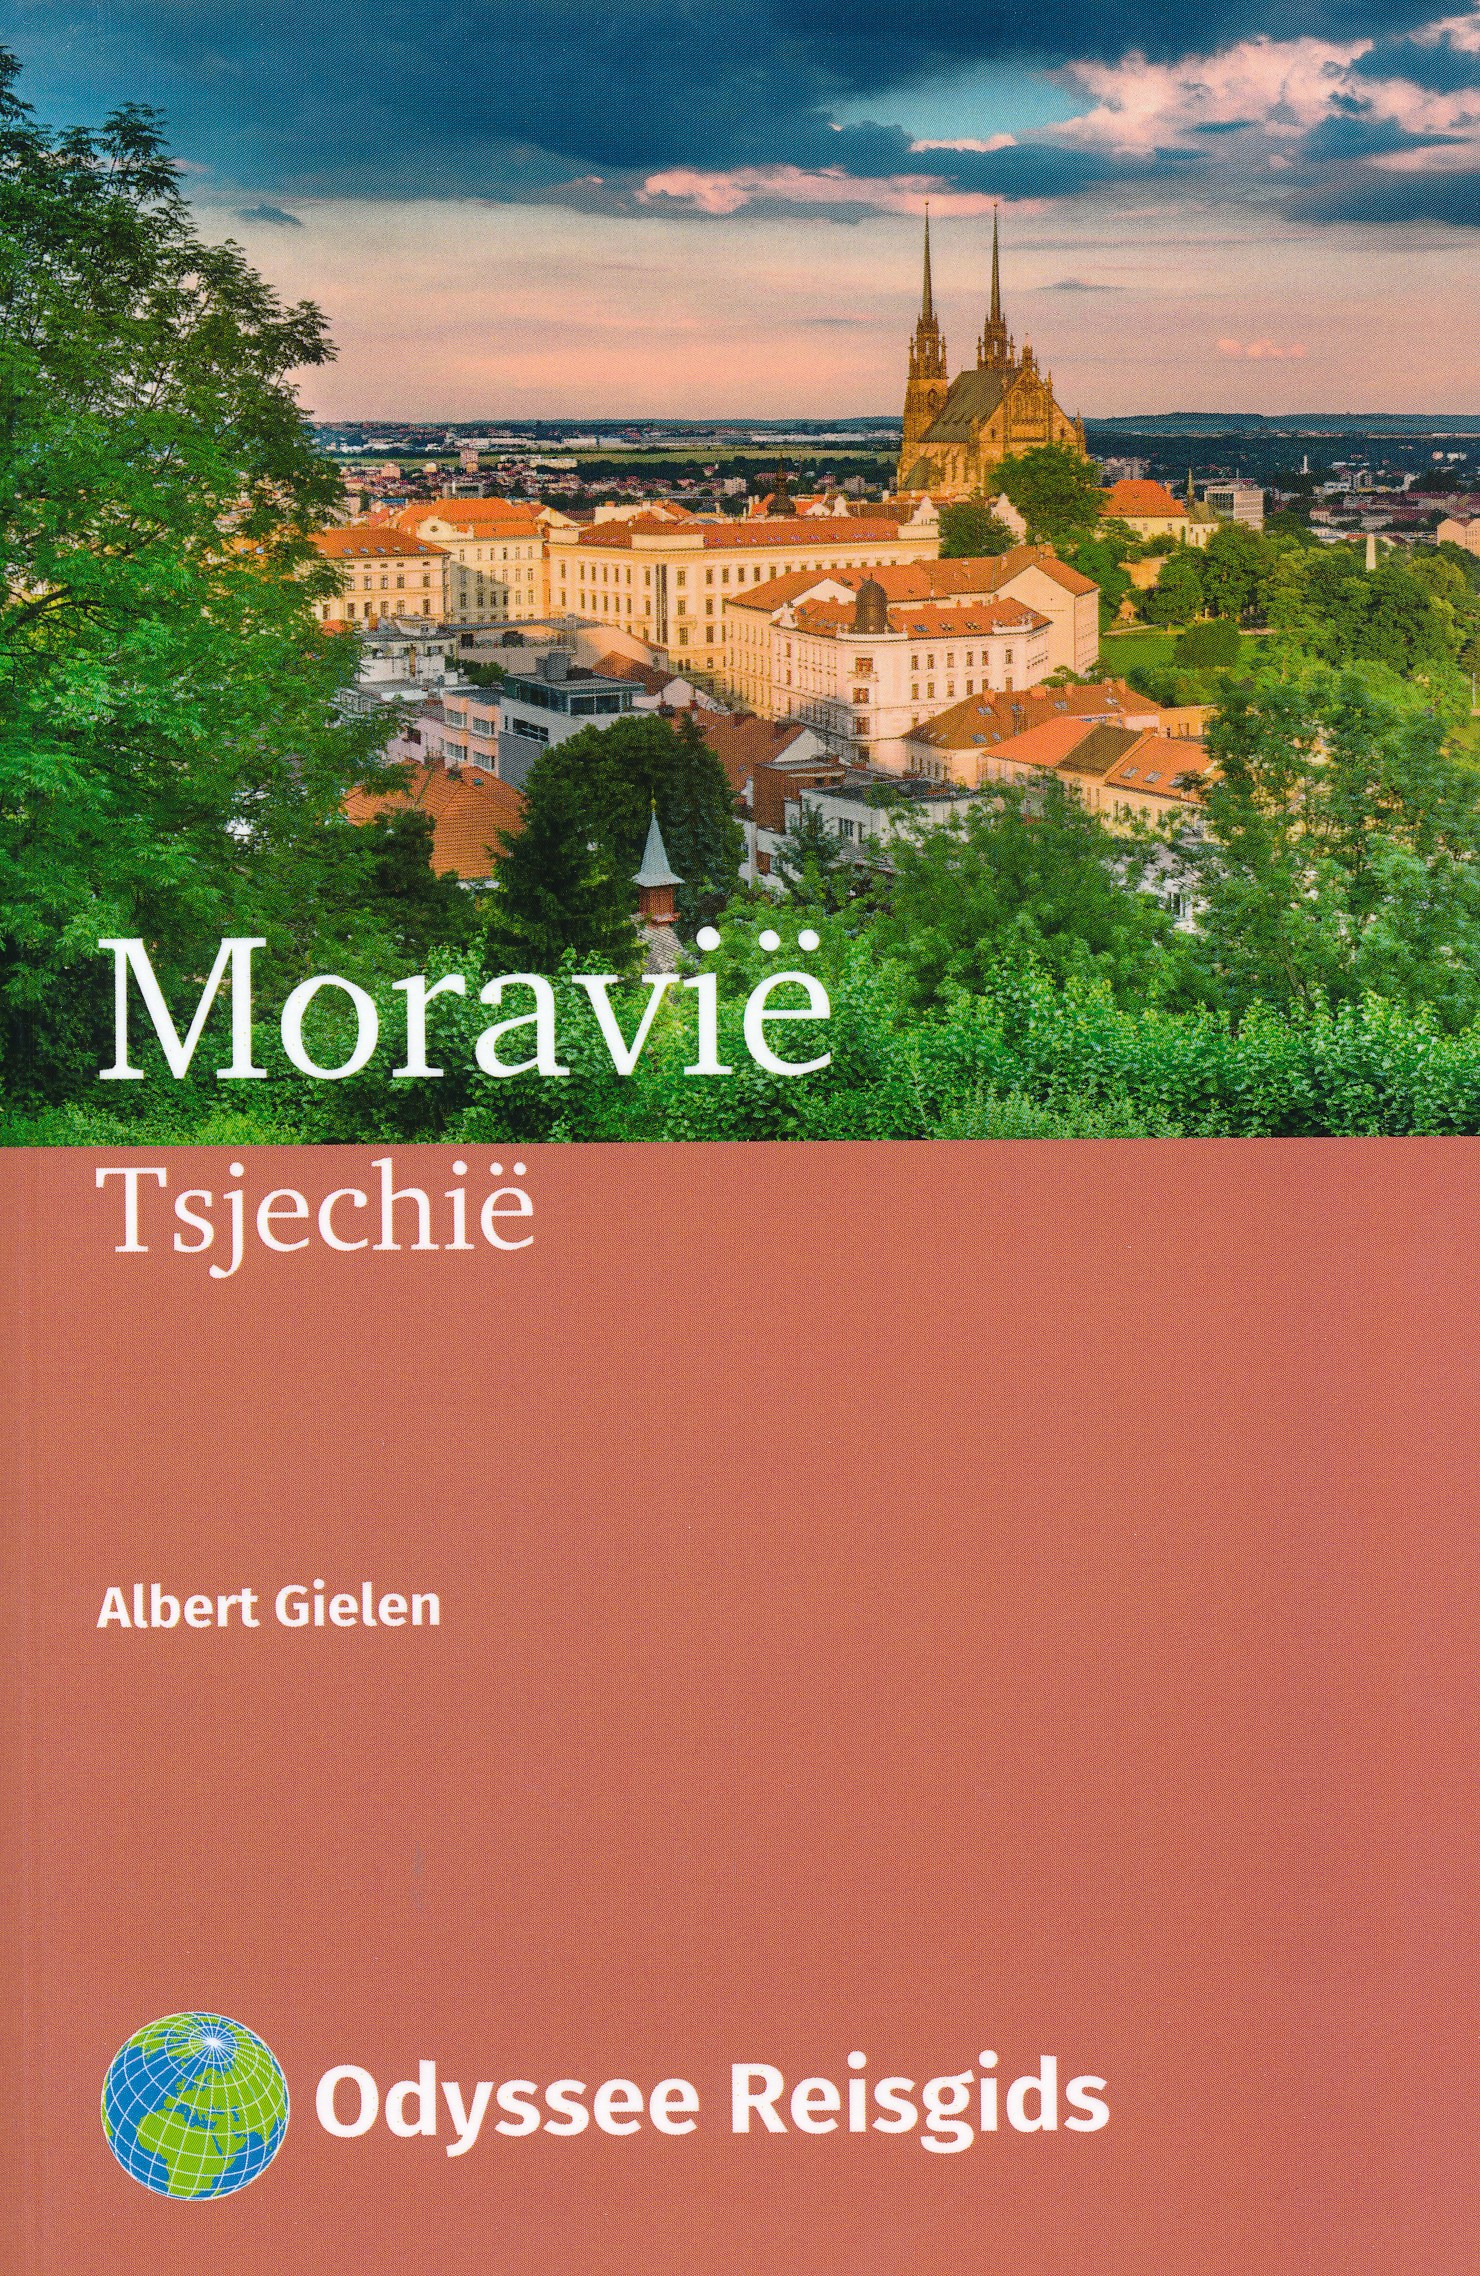 Online bestellen: Reisgids Moravië - Tsjechië | Odyssee Reisgidsen